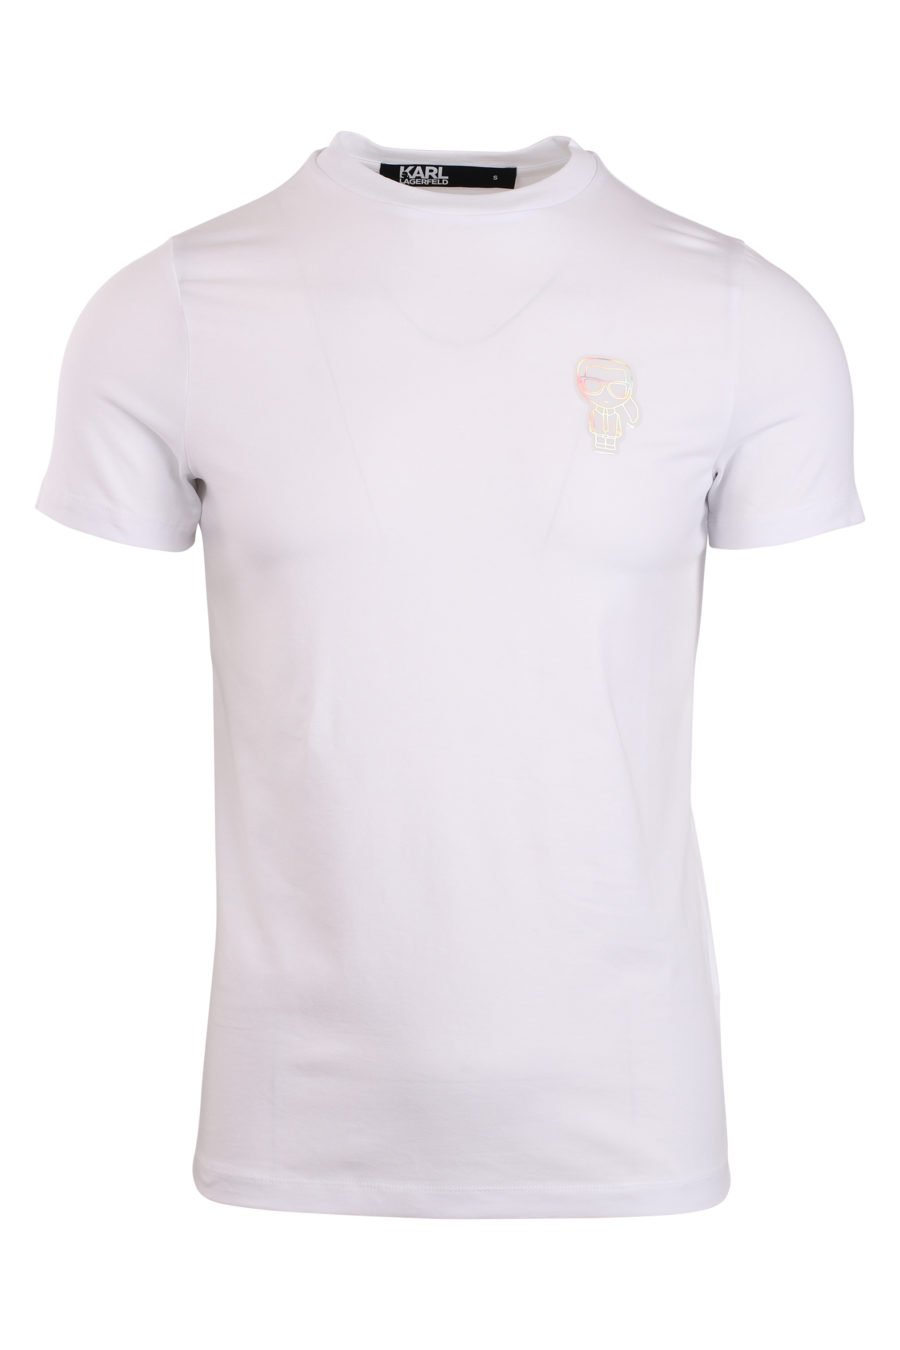 Camiseta blanca con logo en silueta tornasol pequeño - IMG 0867